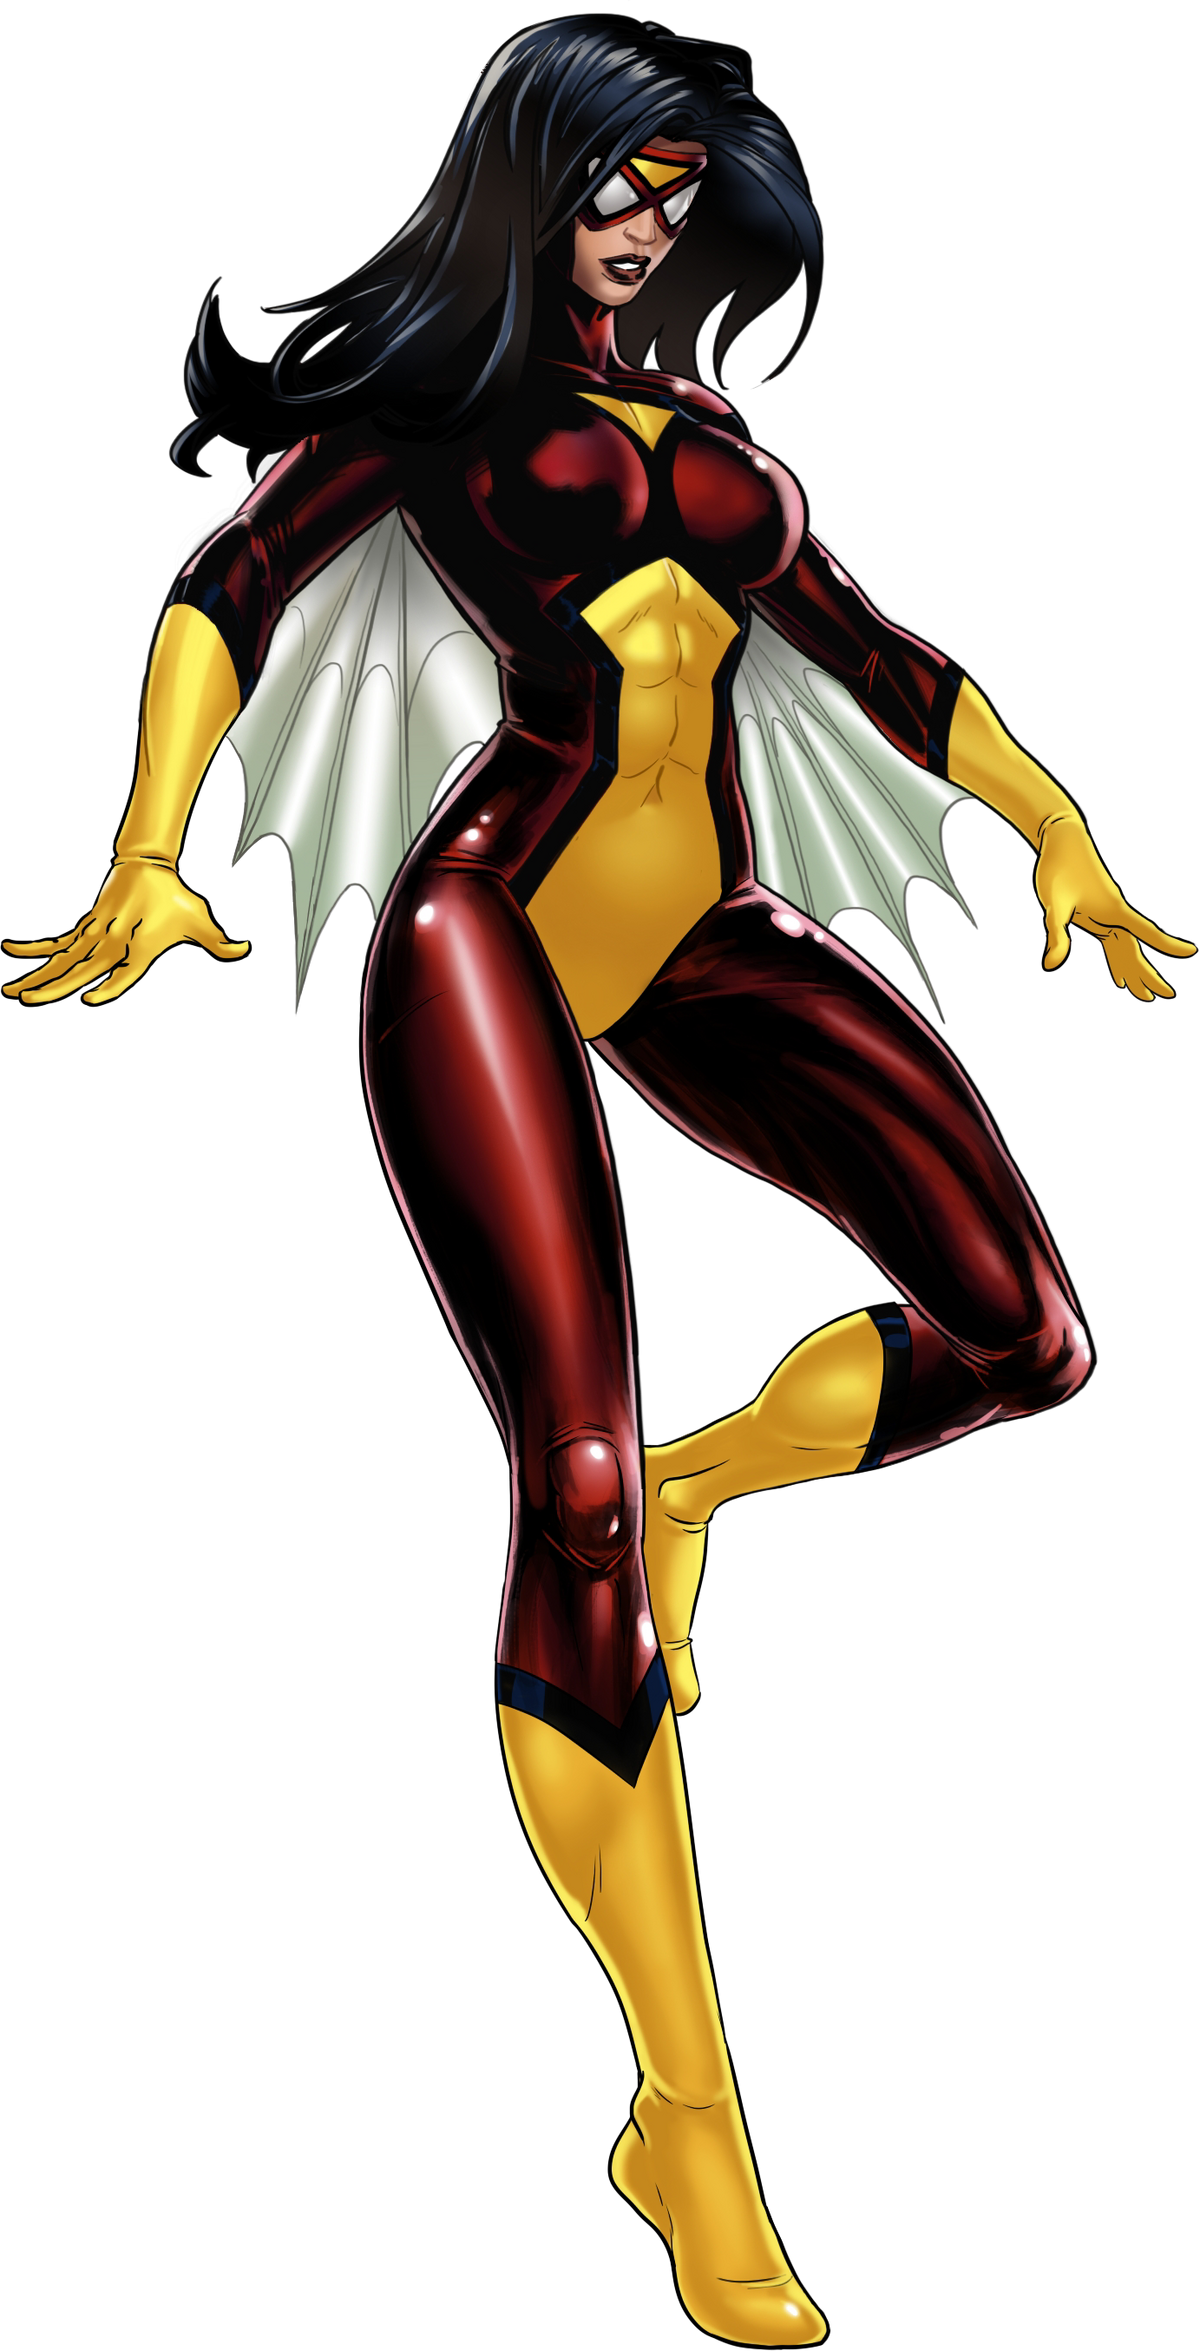 Spider-Woman (Jessica Drew) - Wikipedia